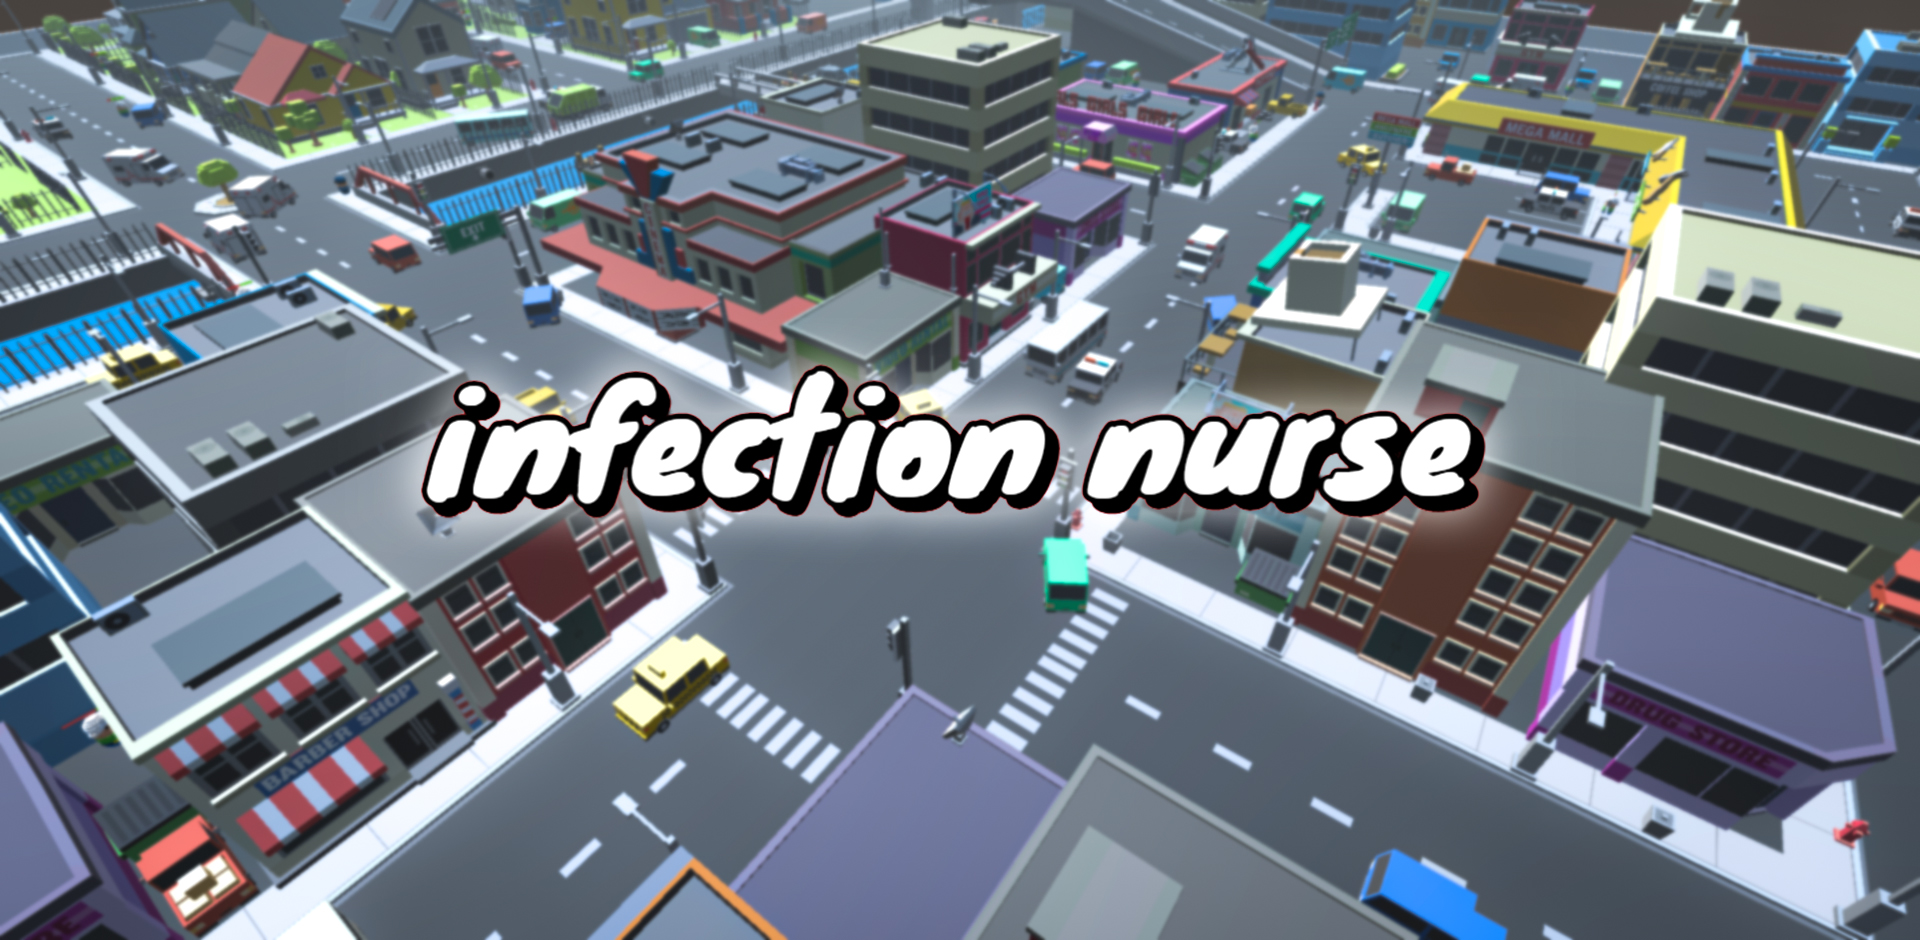 infection nurse